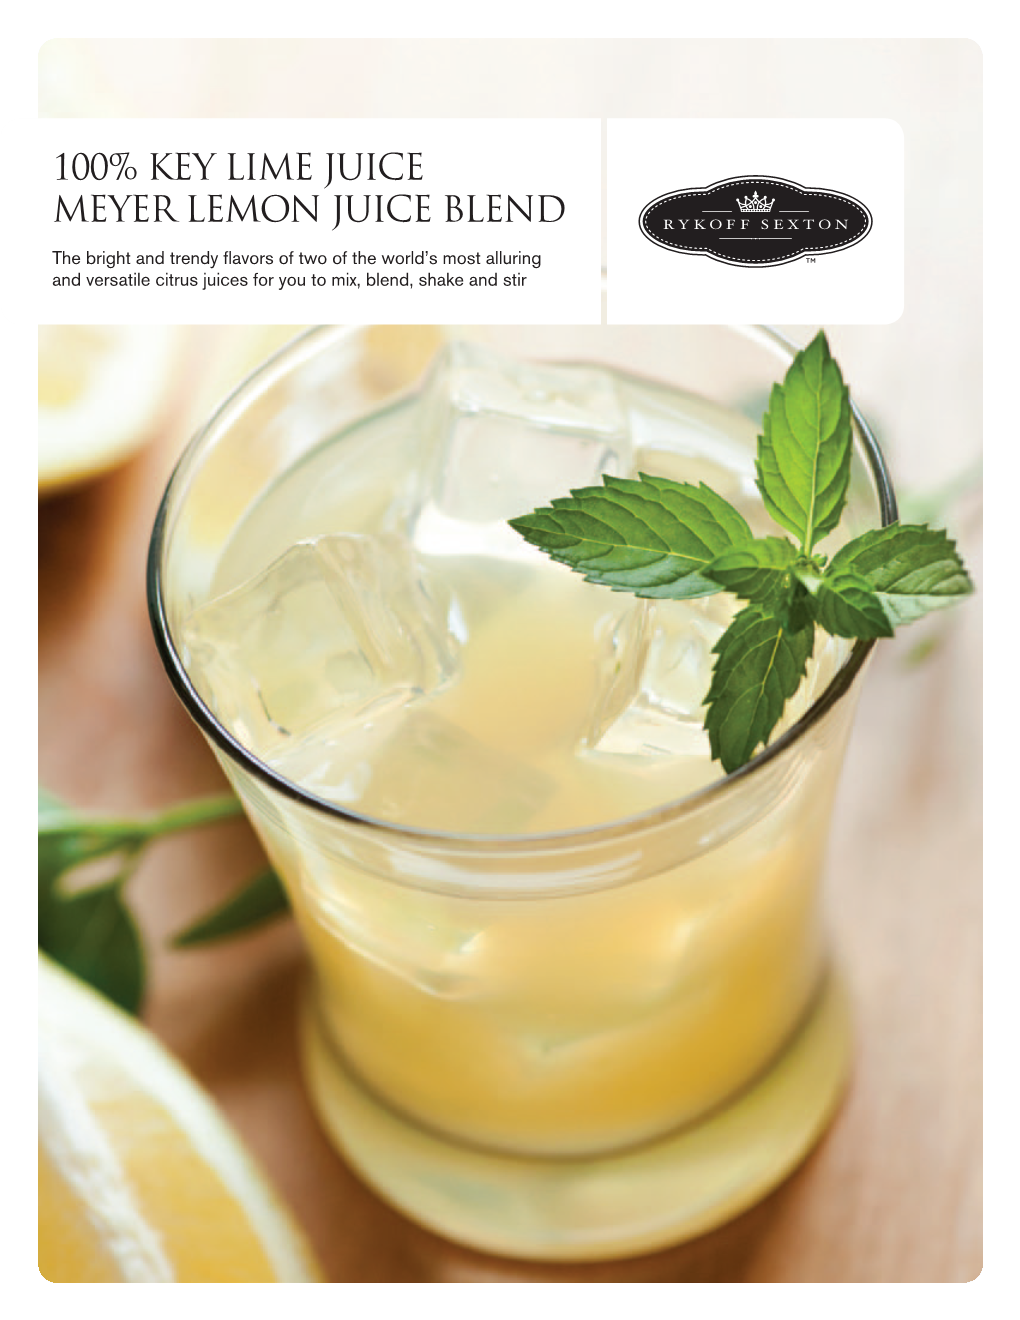 100% Key Lime Juice Meyer Lemon Juice Blend